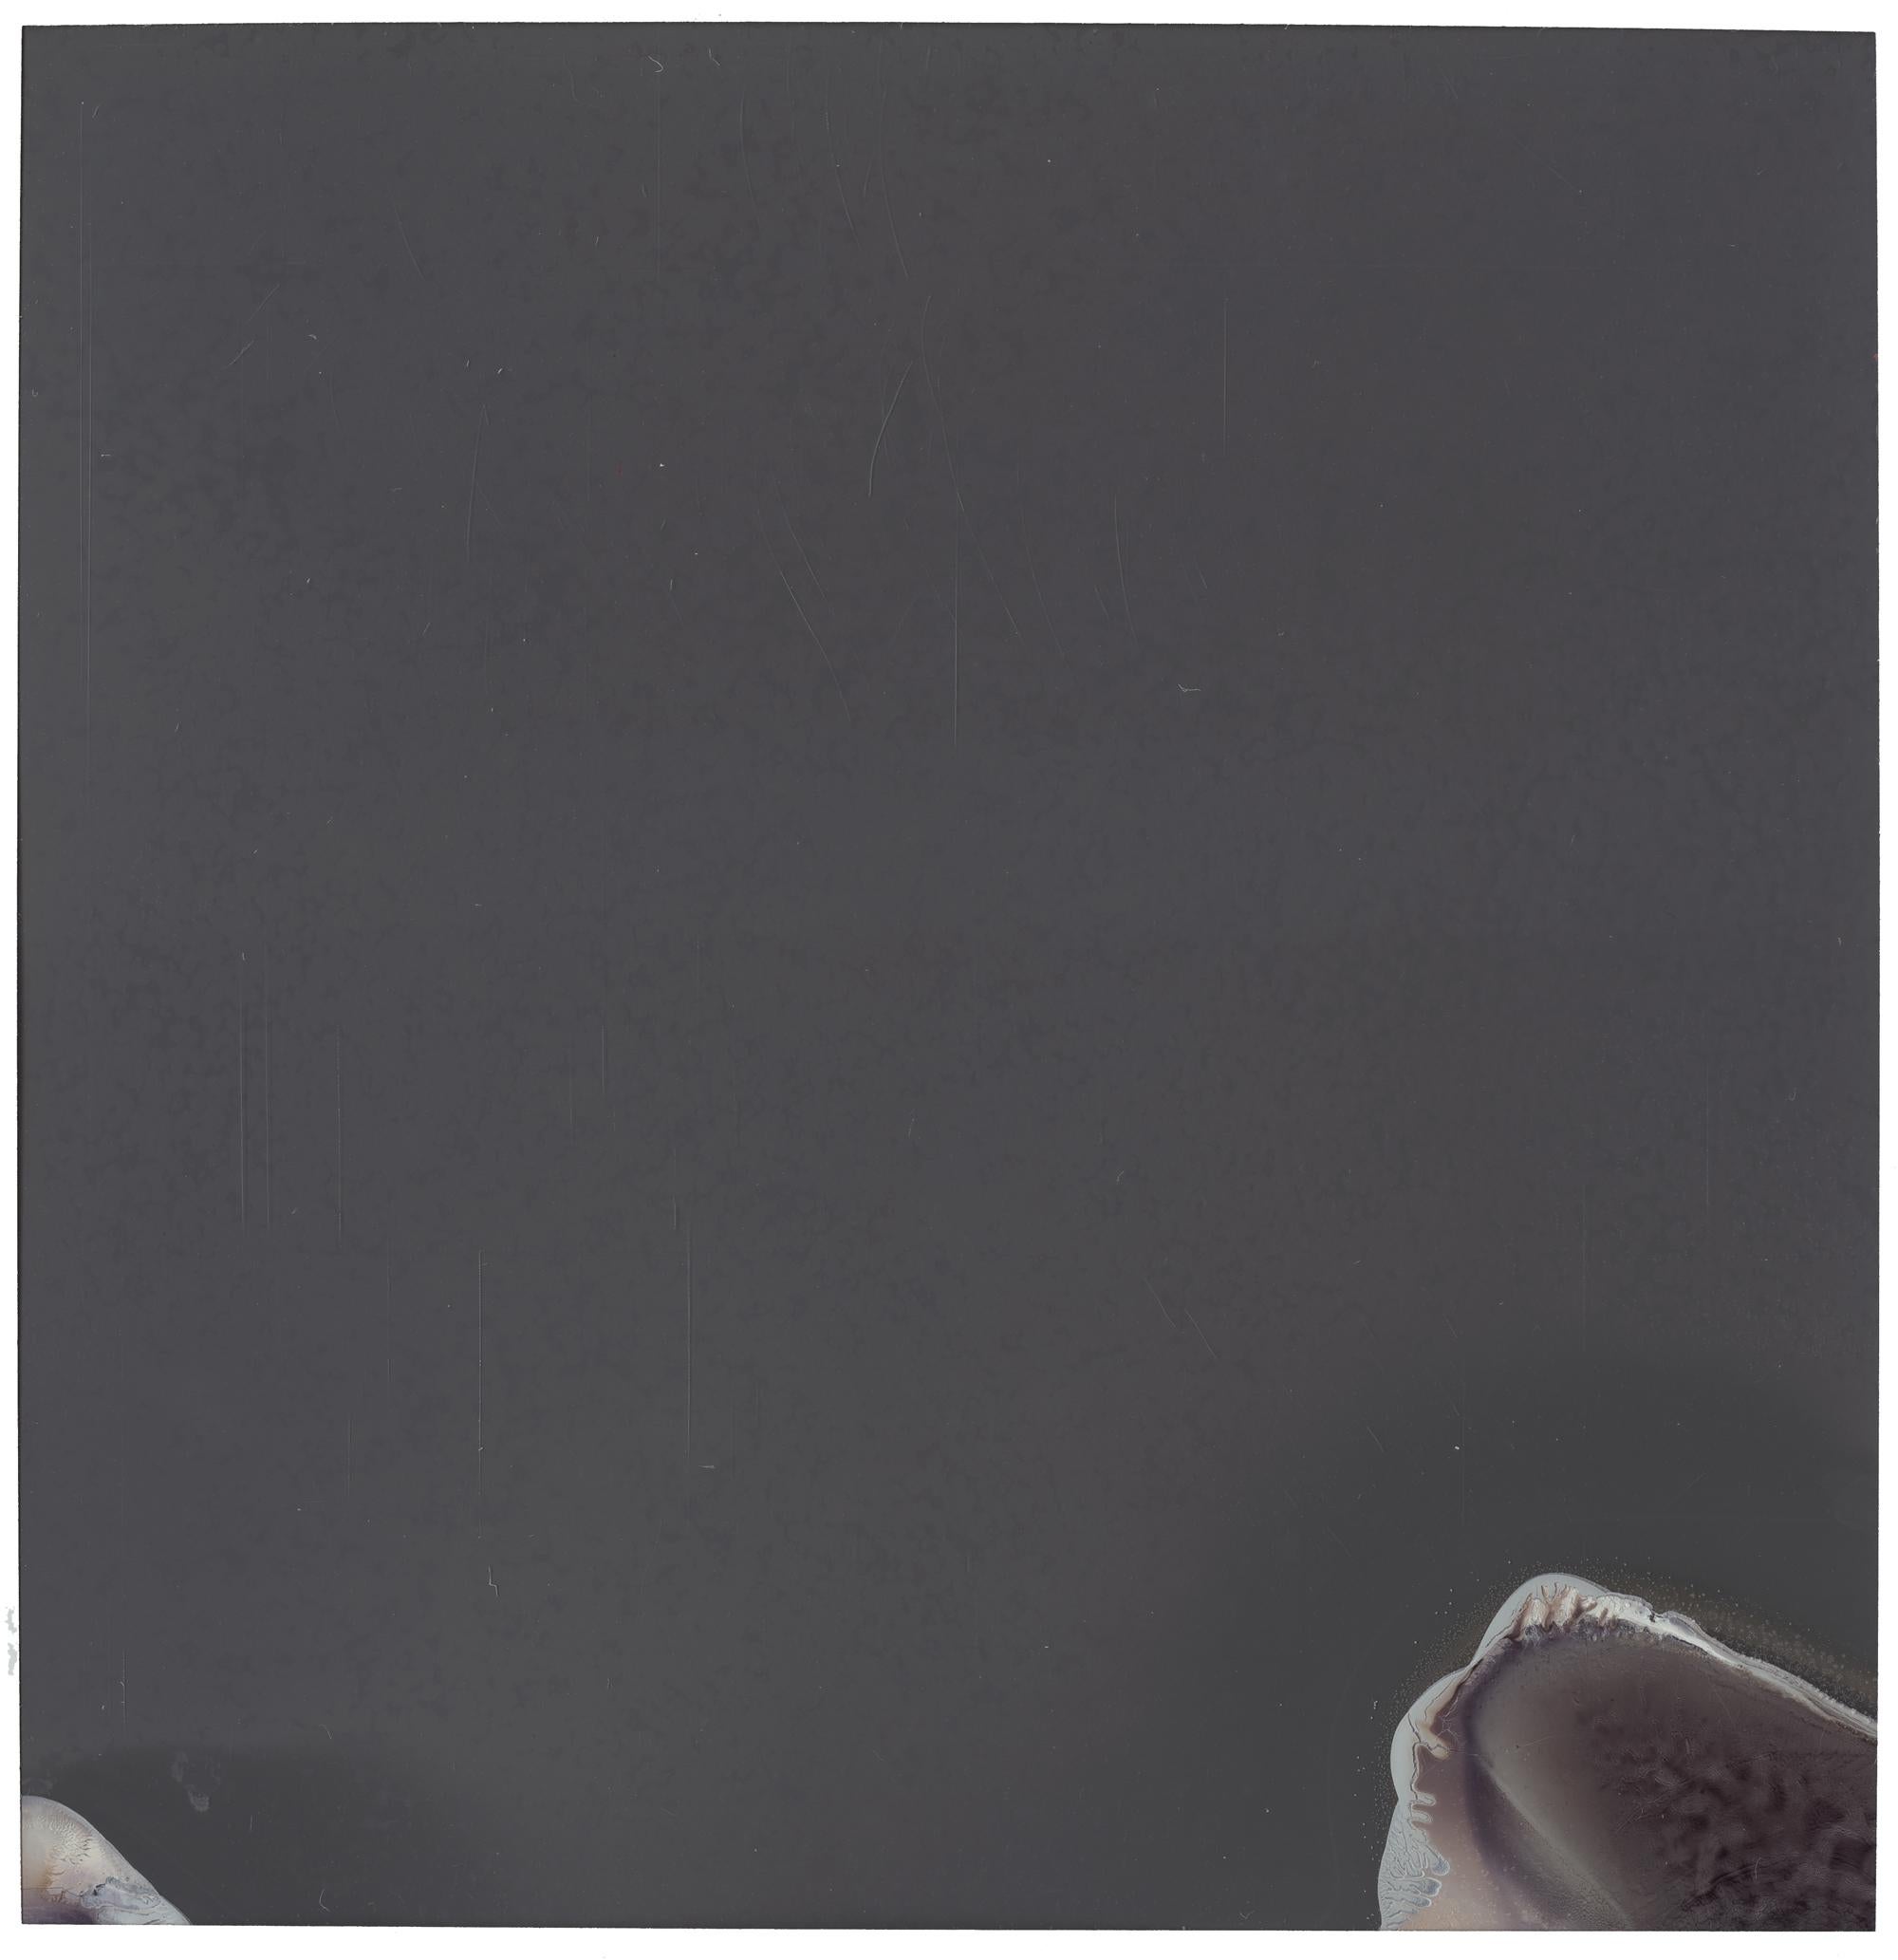 Stefanie Schneider Abstract Photograph - Eternity (Deconstructivism) - Contemporary, Expired Polaroid